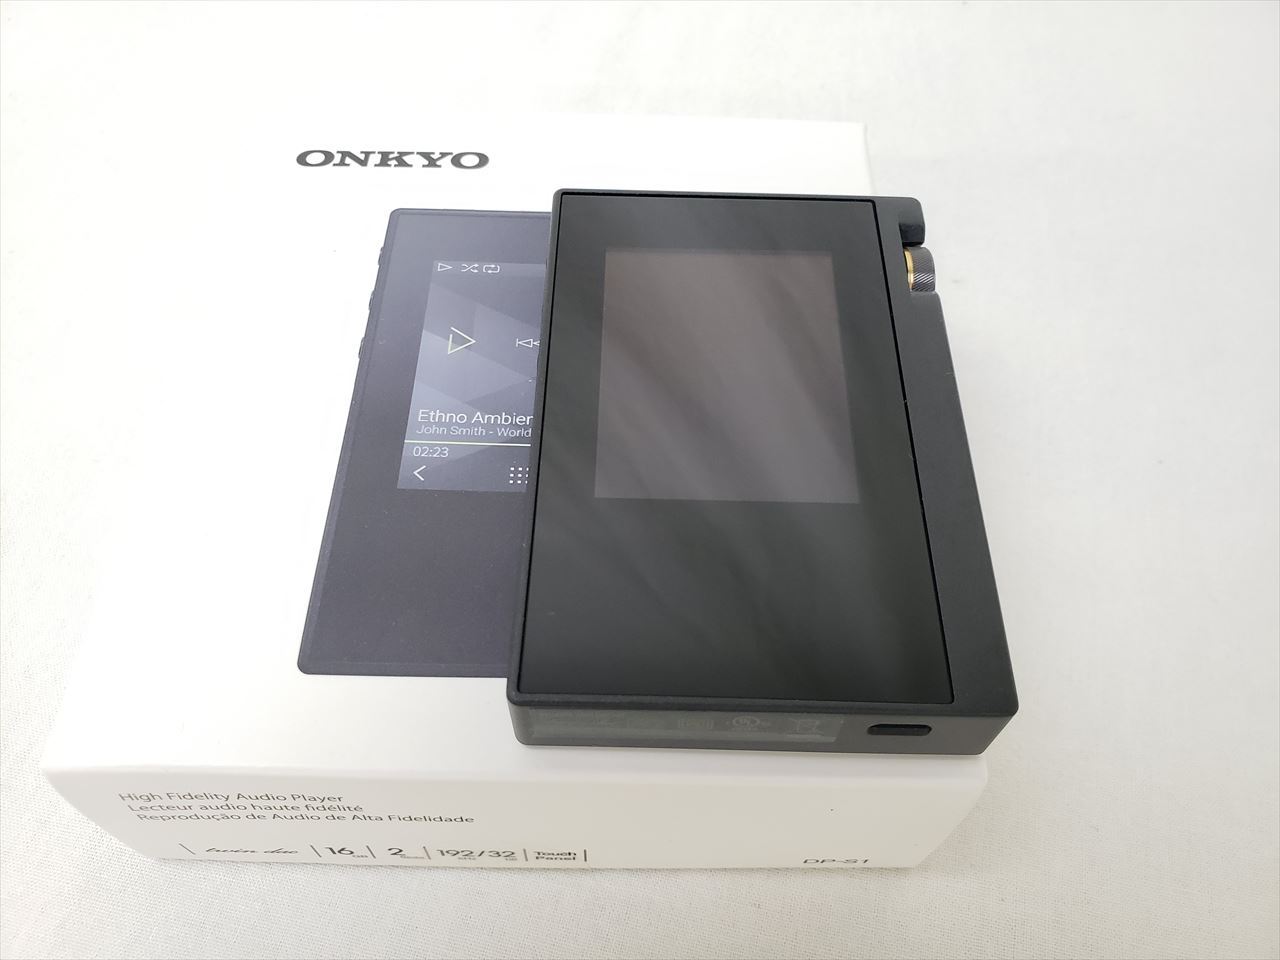 ONKYO DP-S1(B) DAP デジタルオーディオプレイヤー - オーディオ機器